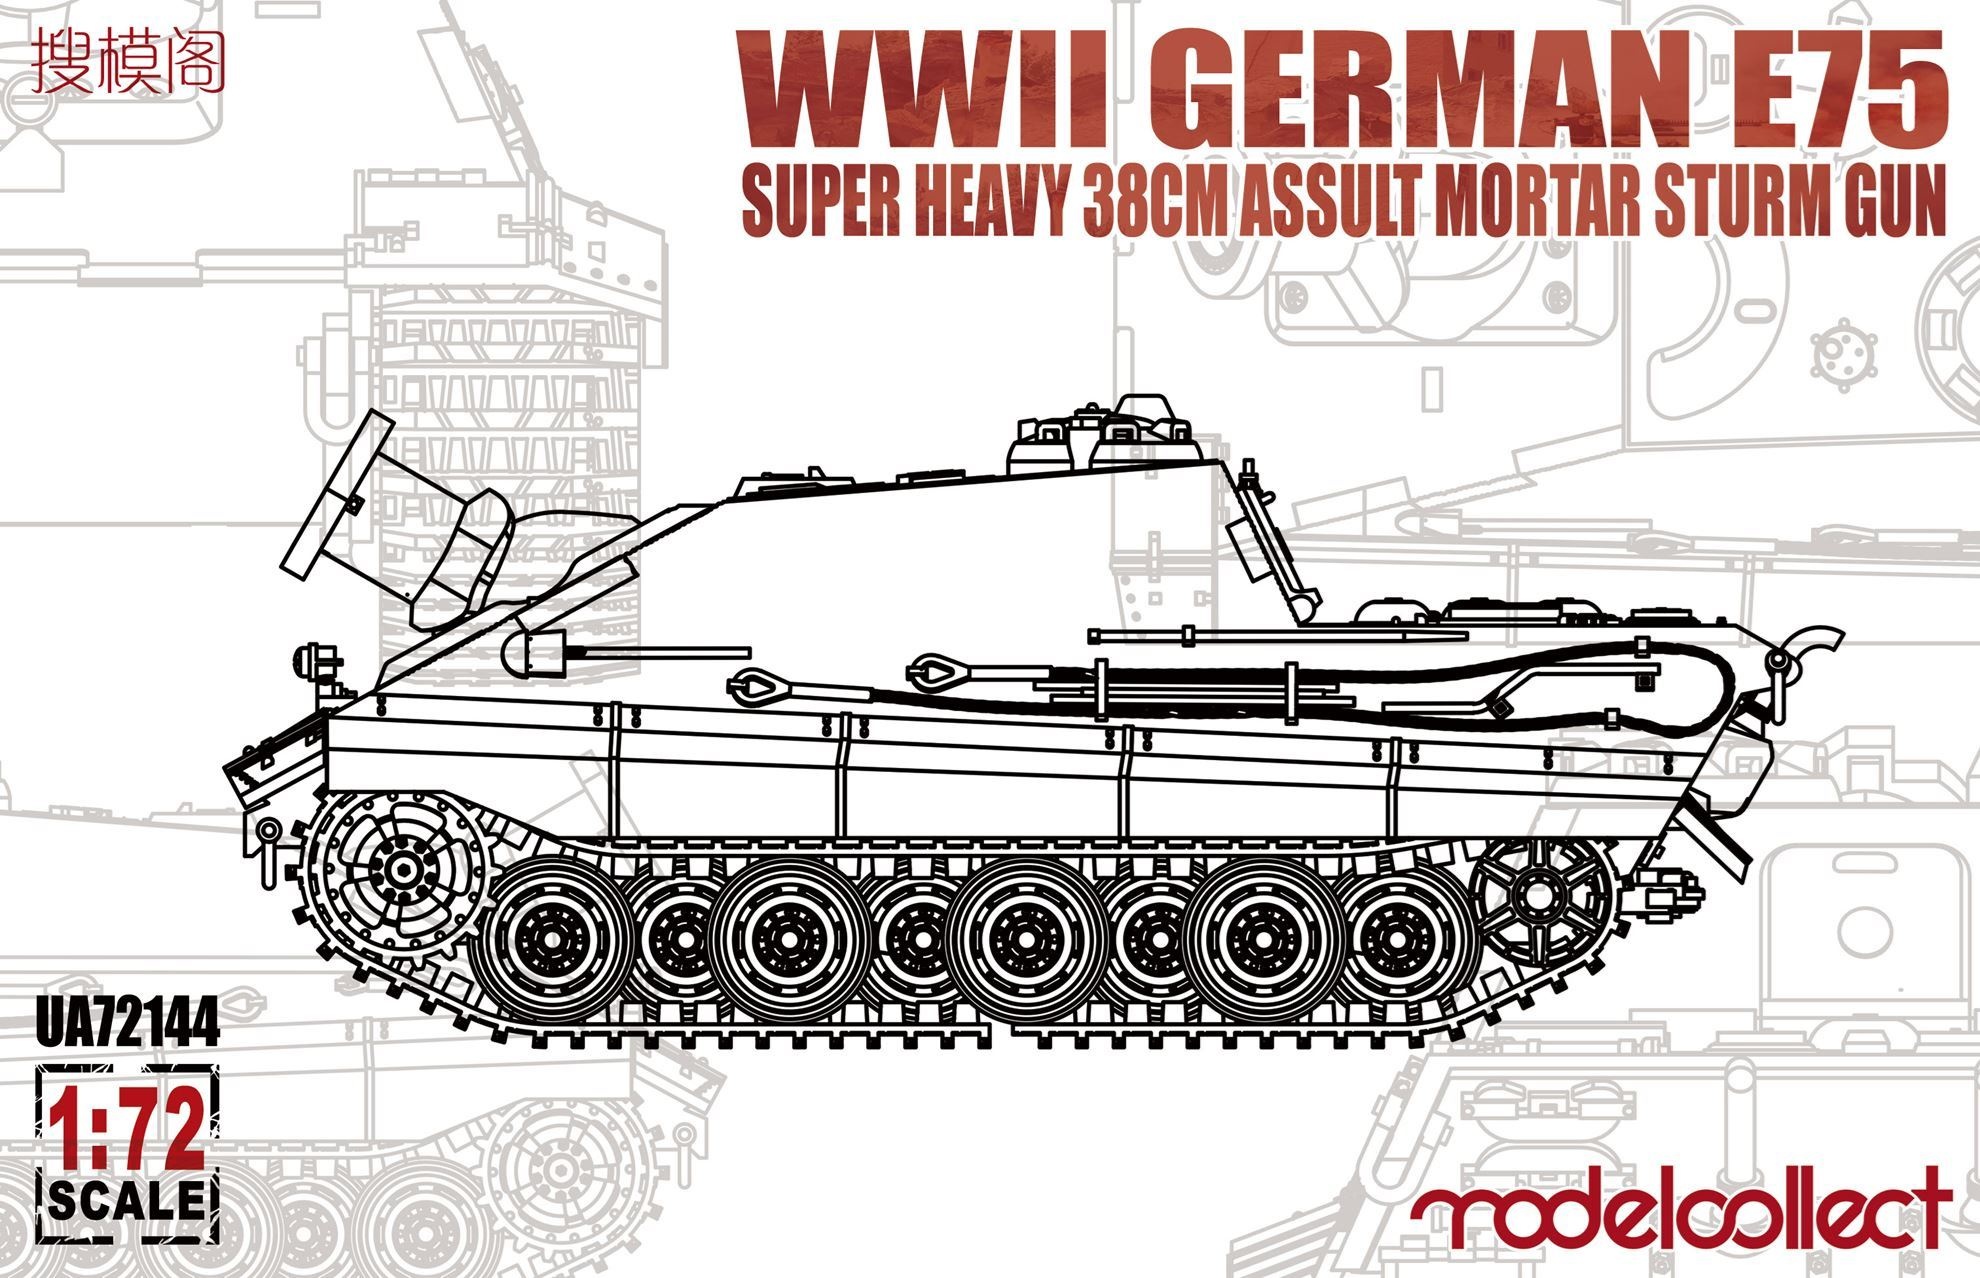 WWII German E-75 Super Heavy 38cm Assult Mortar Sturm Gun | HLJ.com